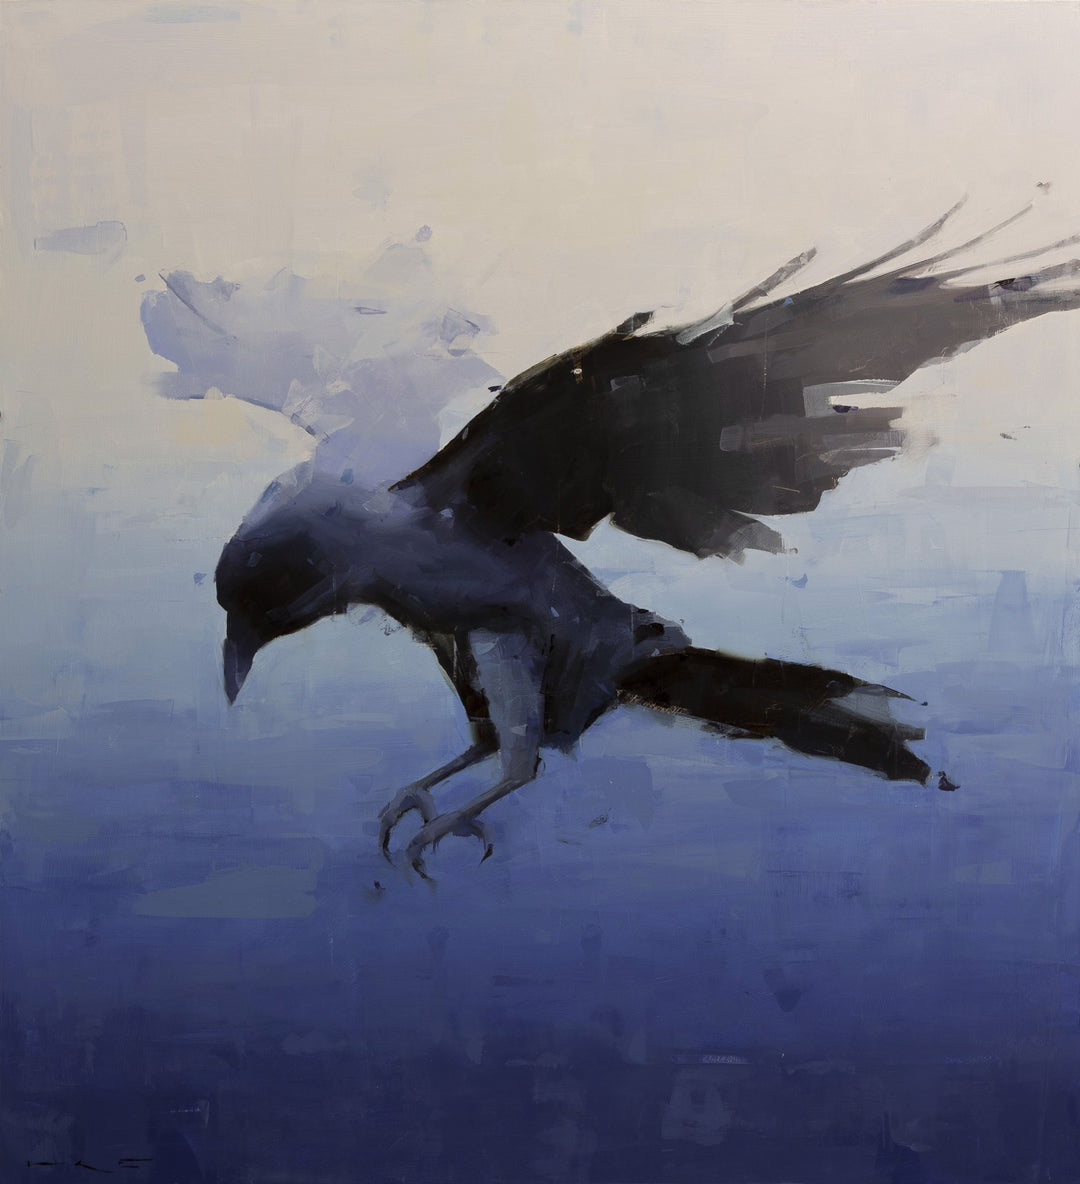 Thorgrimur Einarsson - "Krummi nr 56", Thorgrimur Einarsson's oil painting captures a crow soaring through the sky on a wood panel.